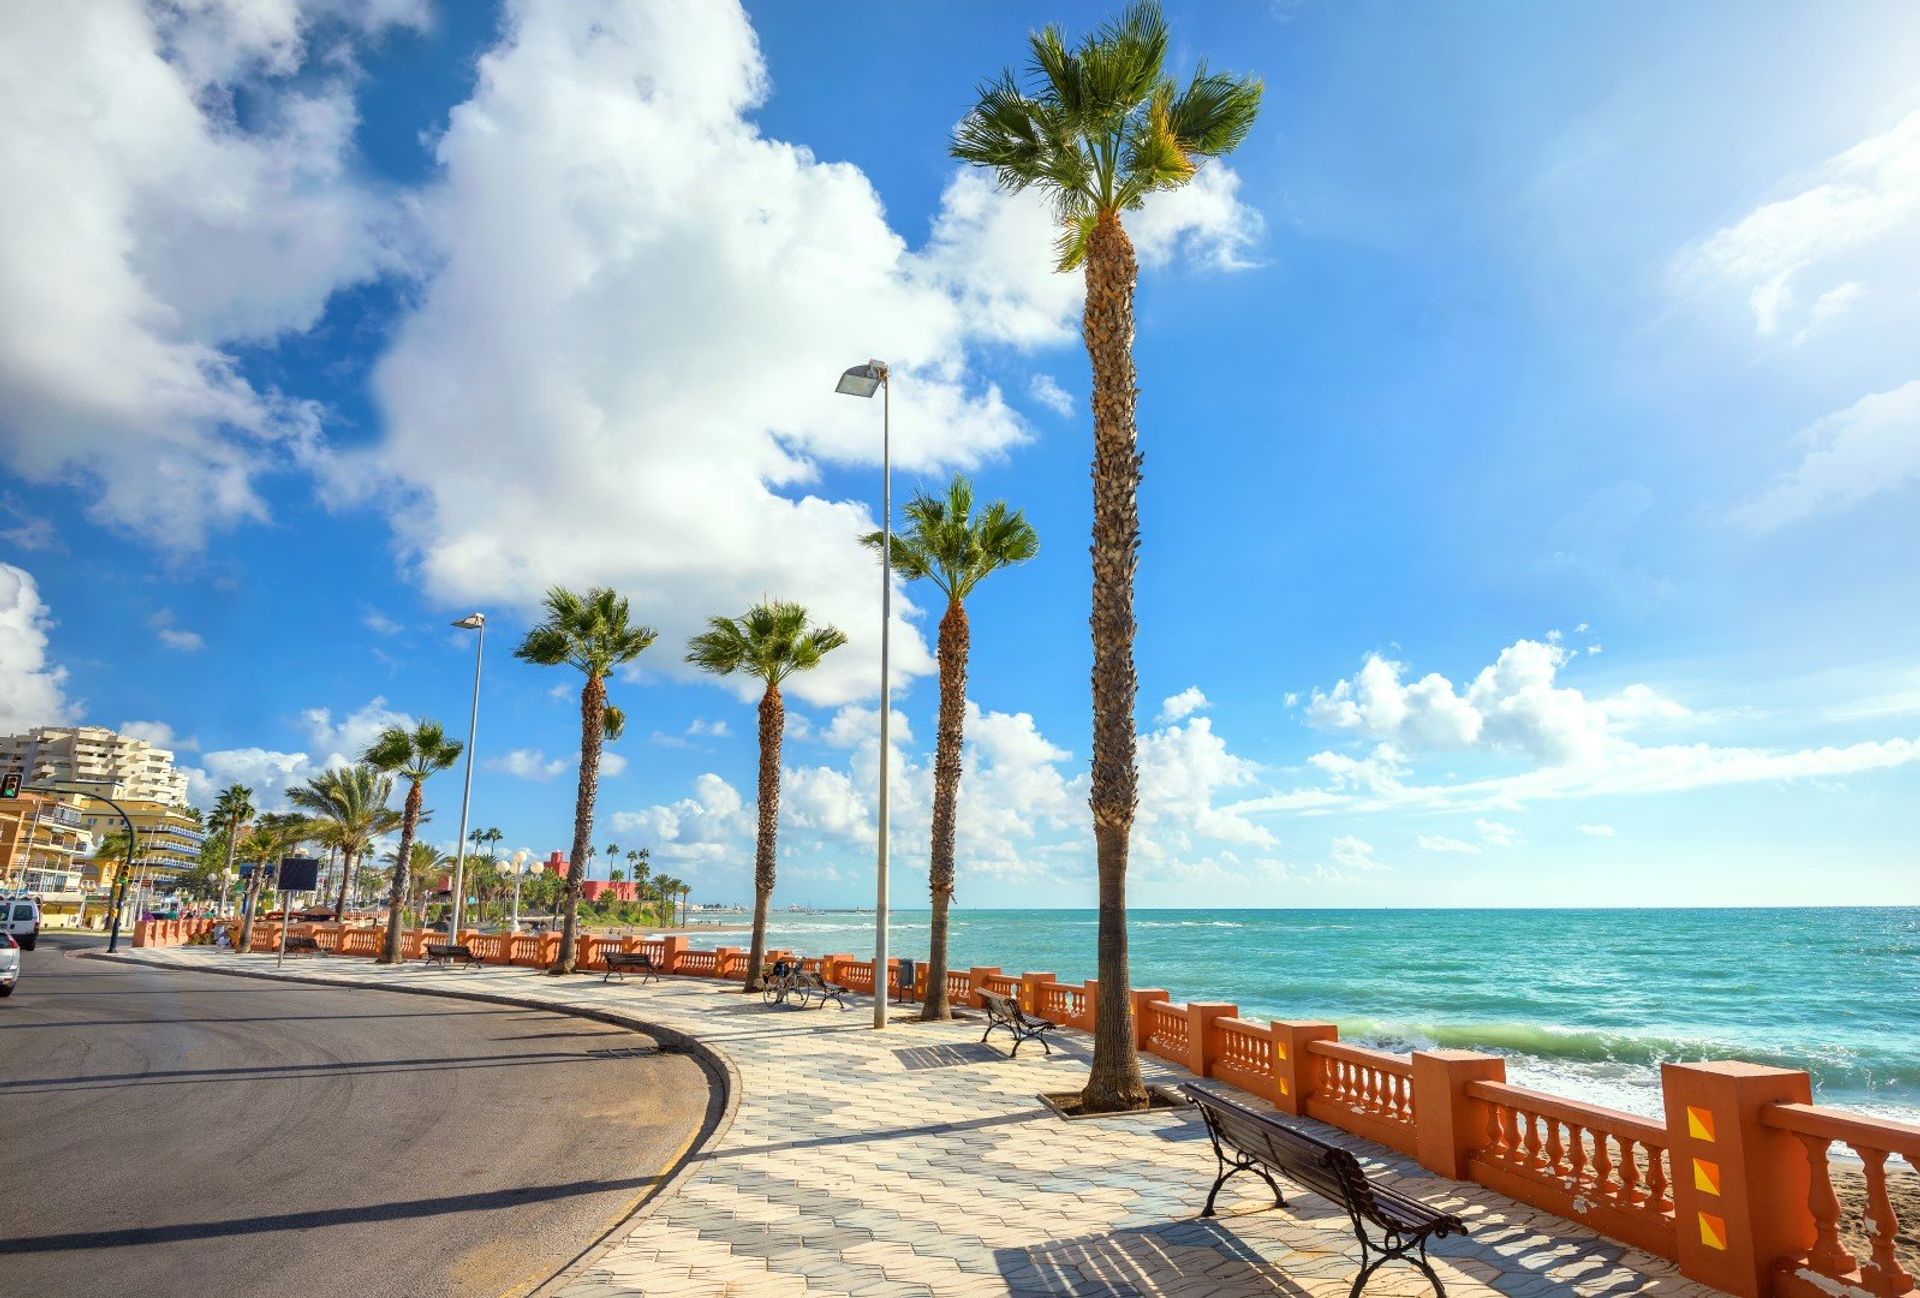 The palm-lined beach promenade of Benalmadena Costa